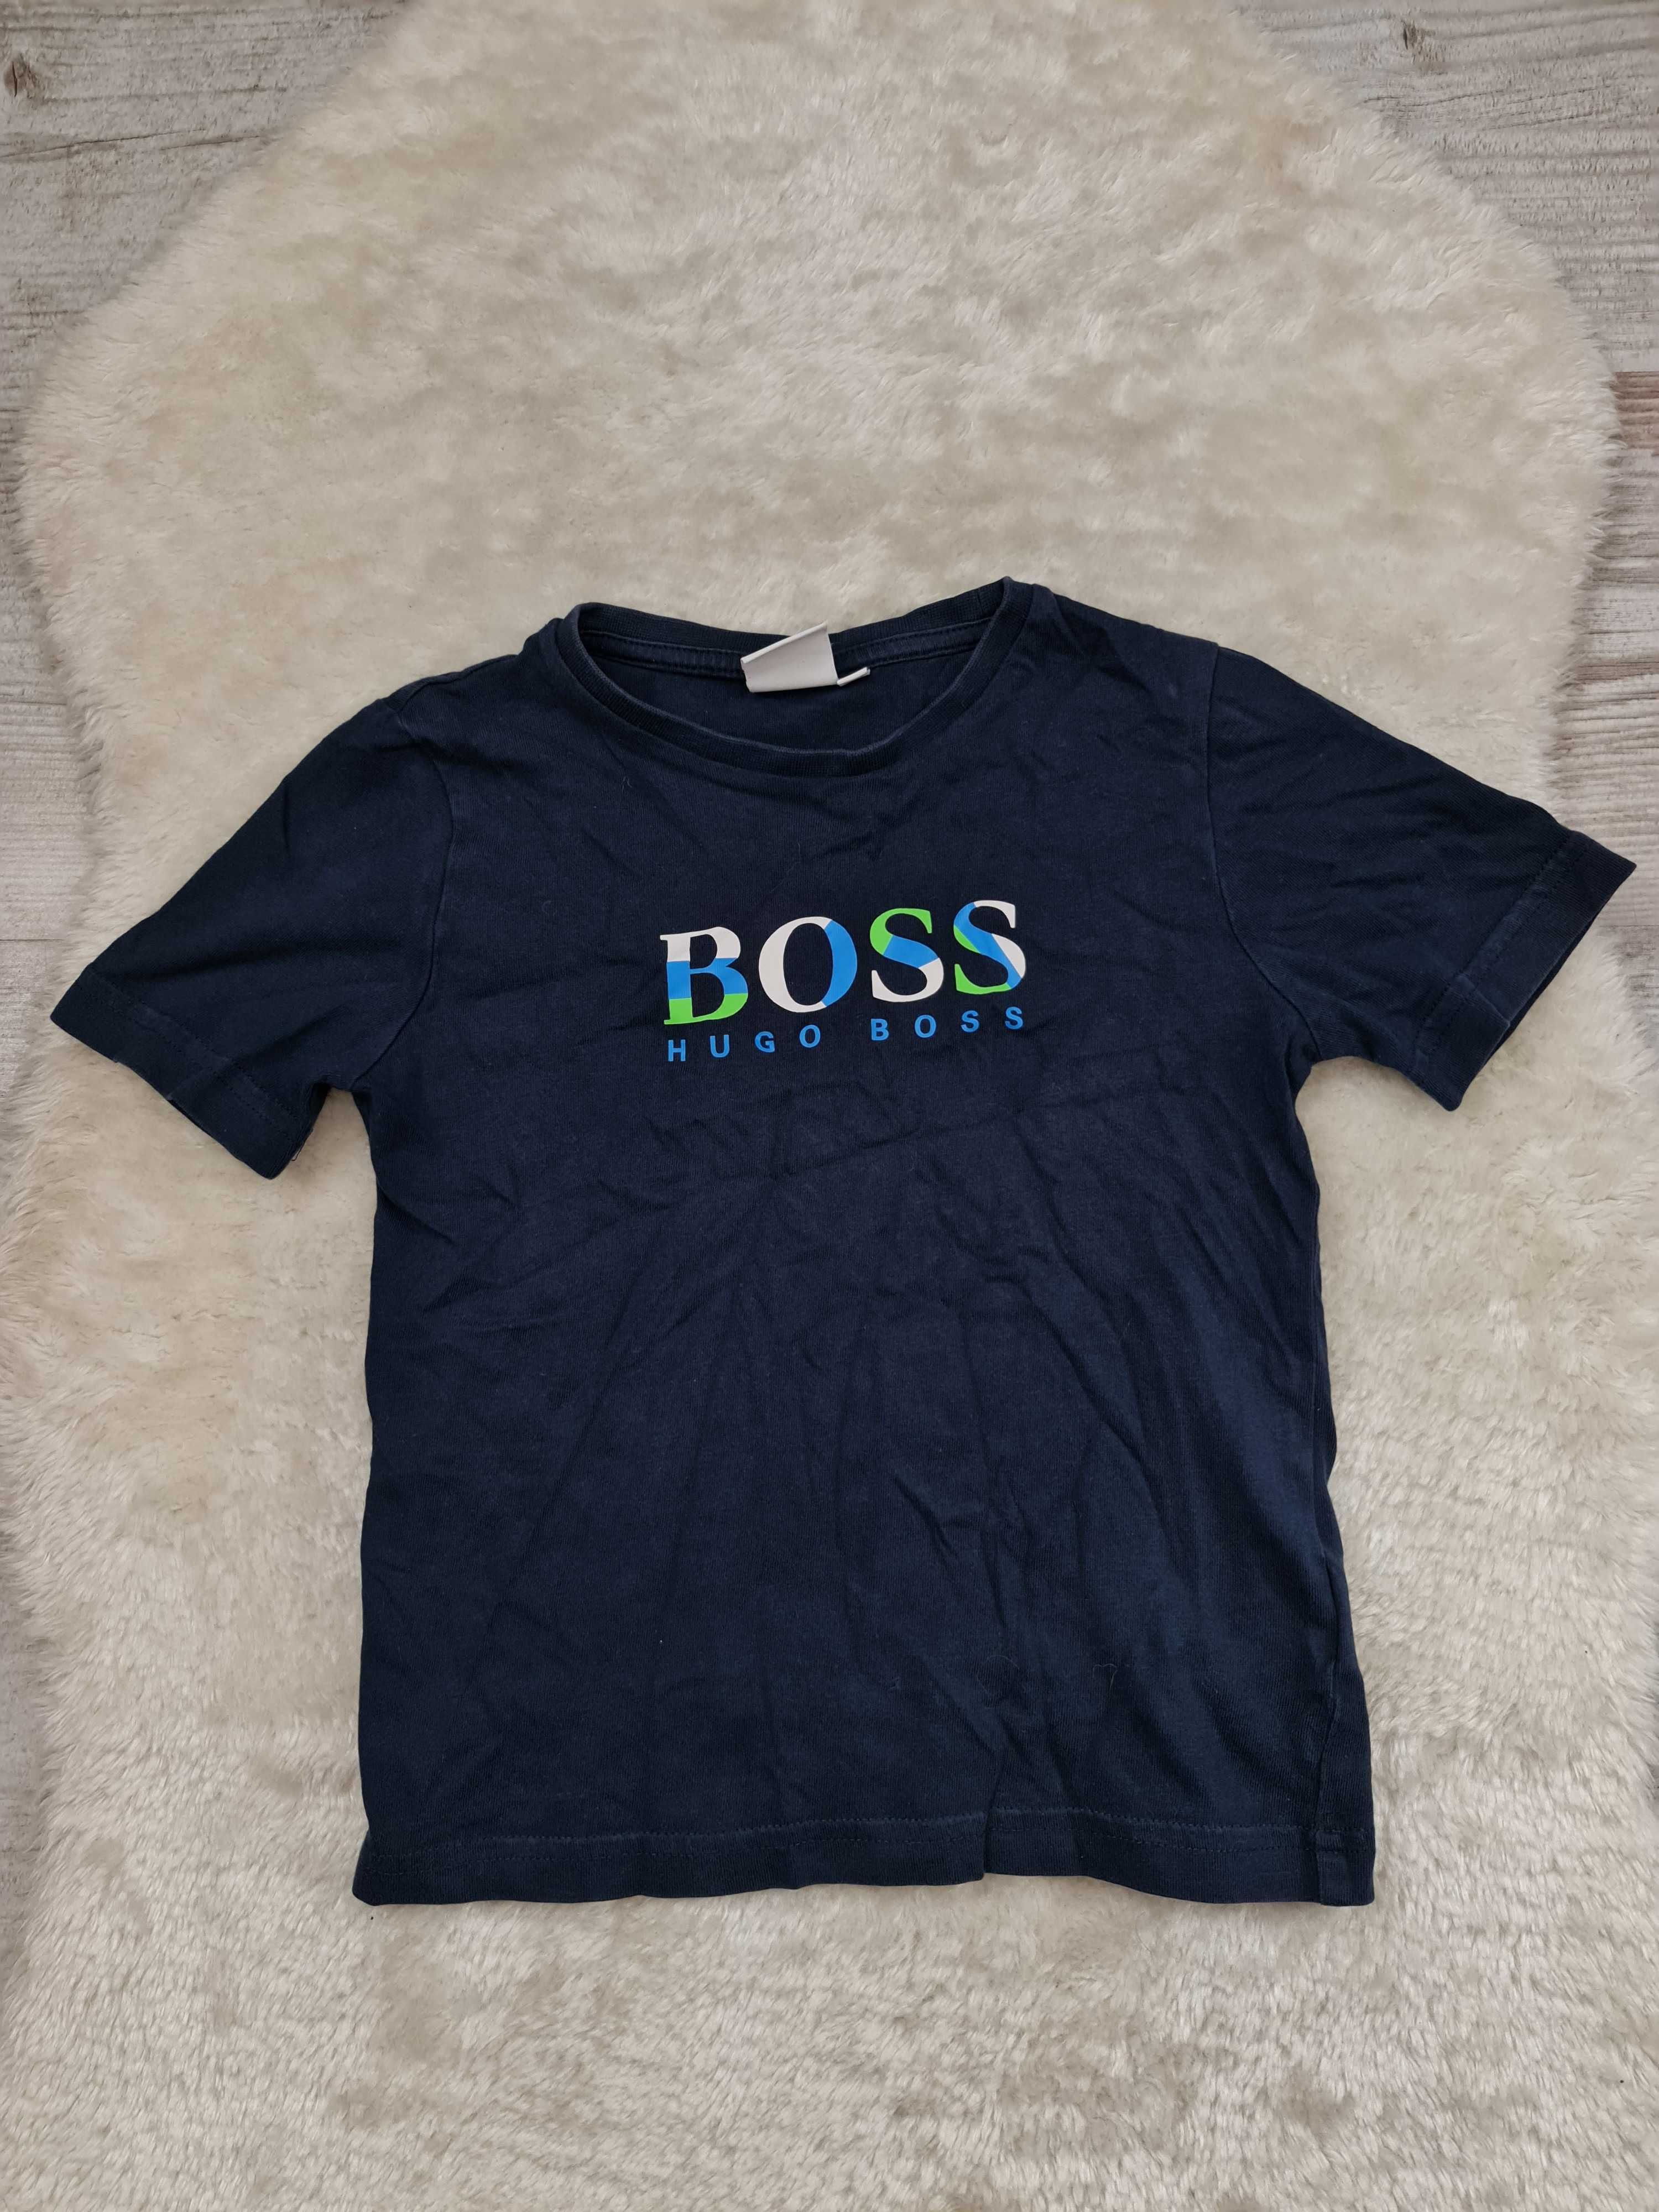 Koszulka T-shirt BOSS Hugo Boss Rozmiar 98 - 104 na Wiek 3 a 4 Lat